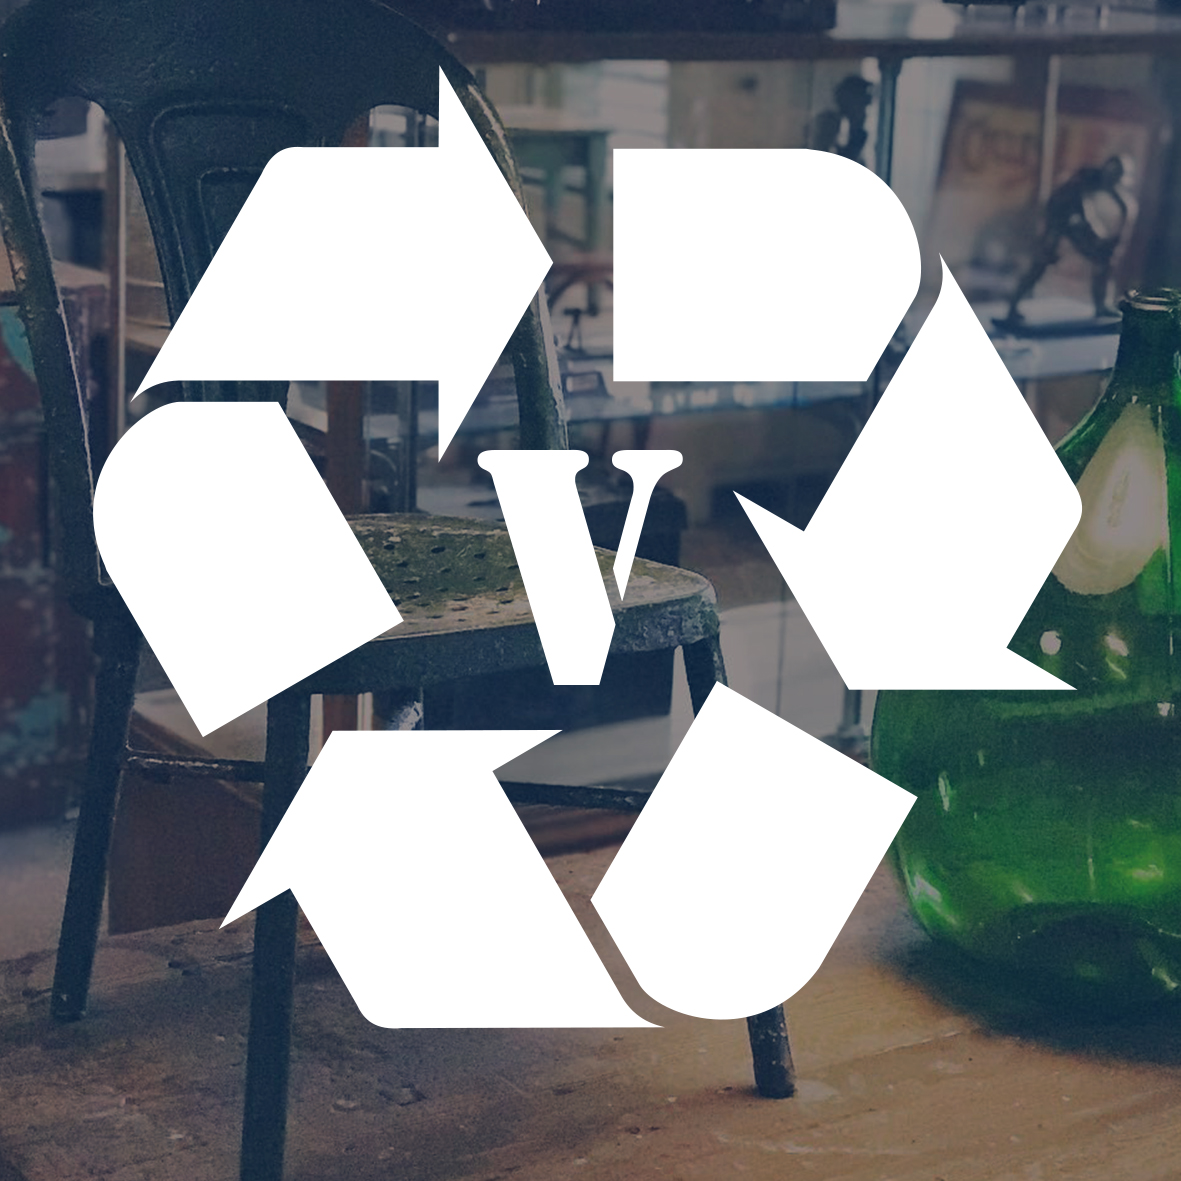 Vivre’s upcycling & recycling